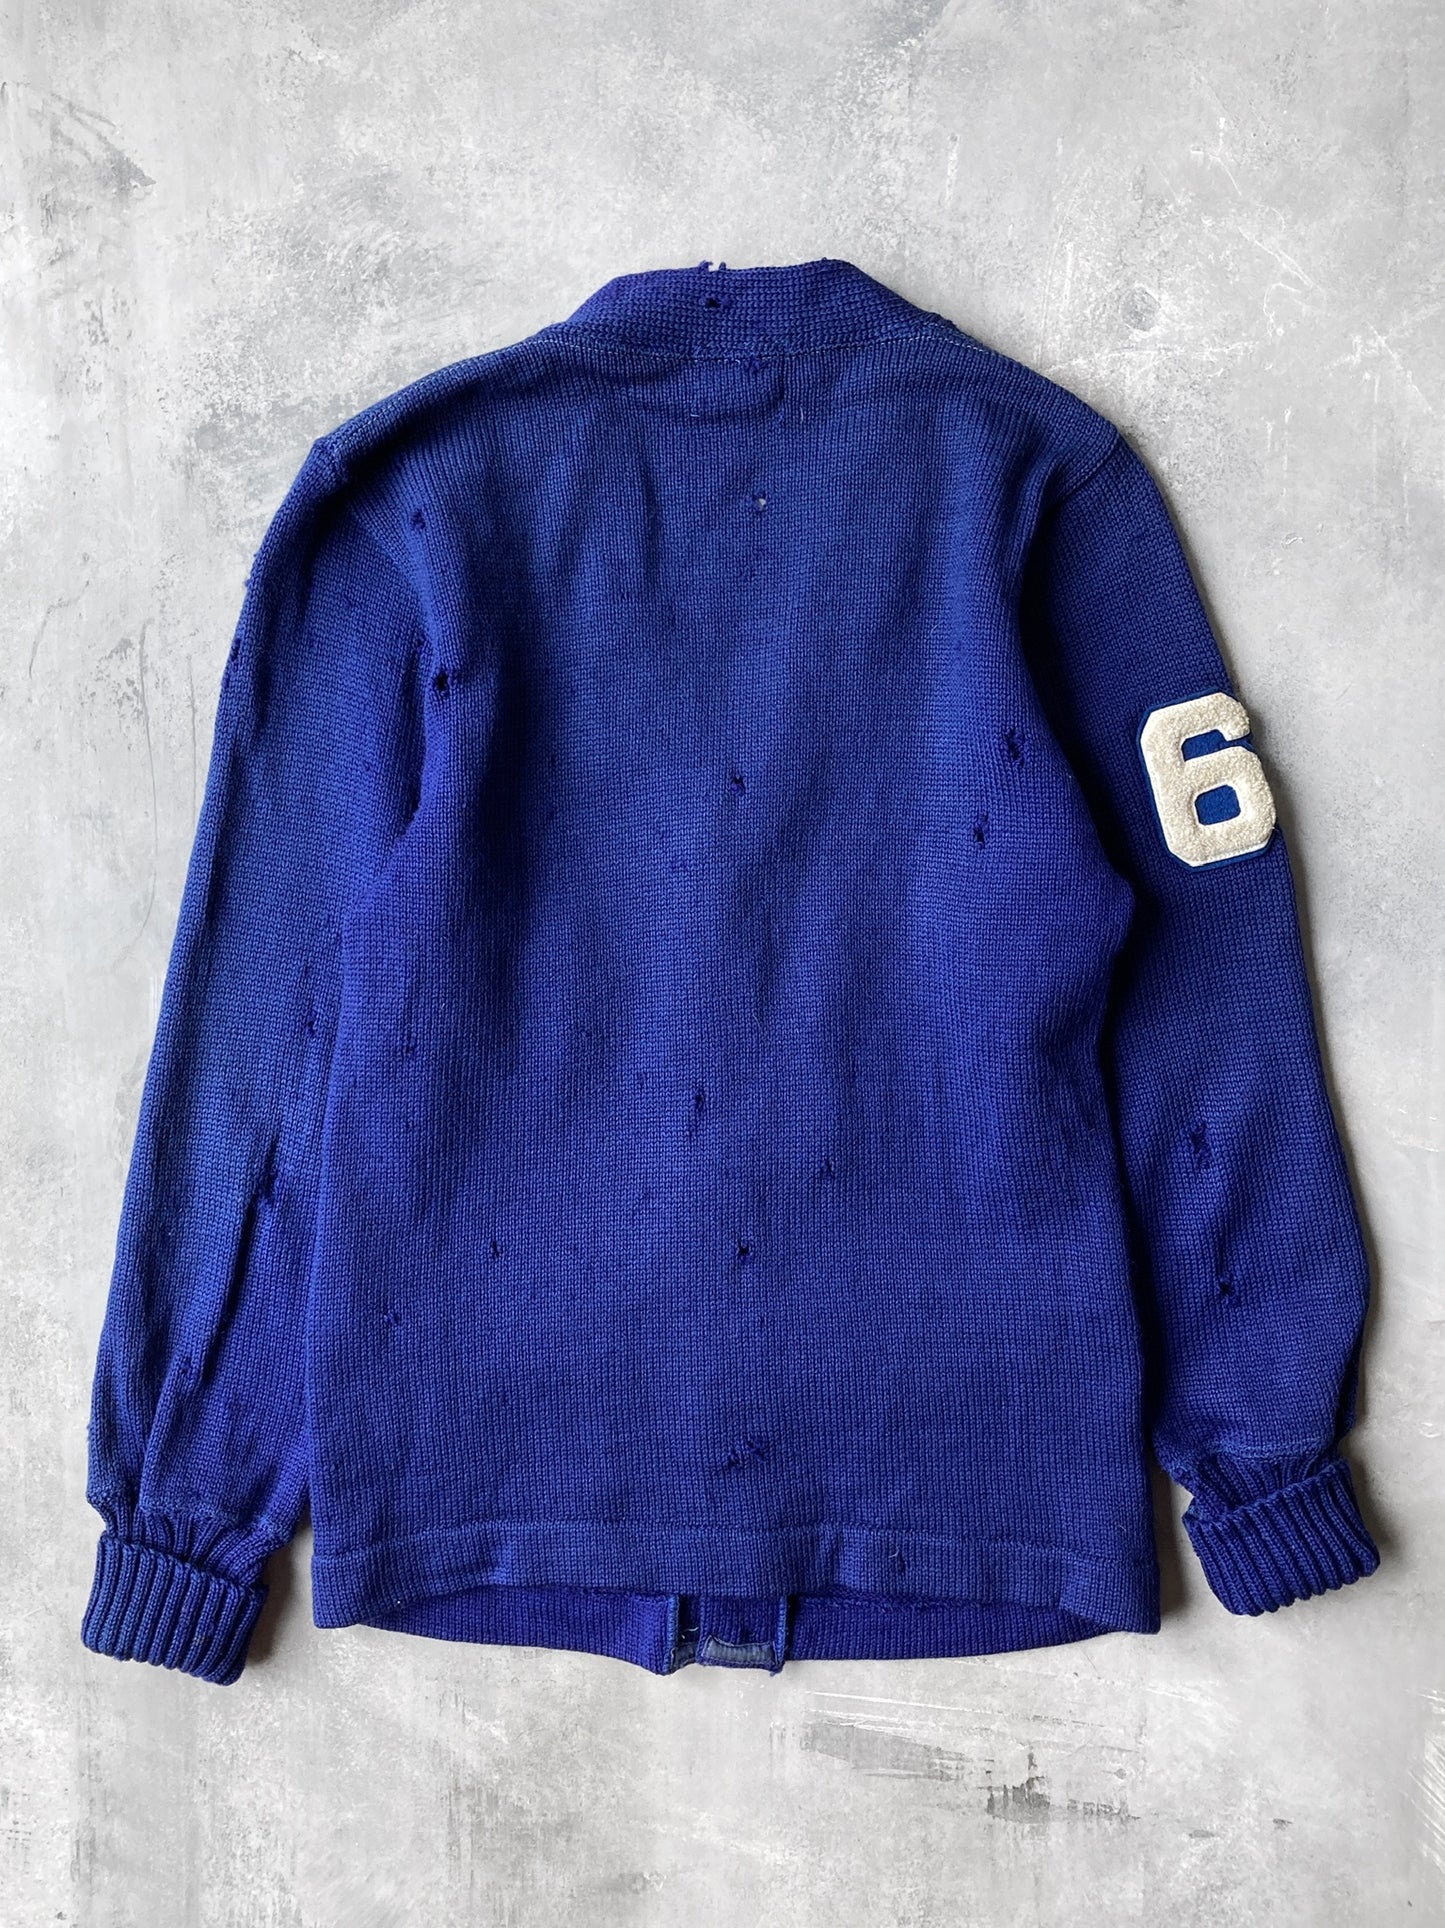 Letterman Cardigan Sweater 50's - XS